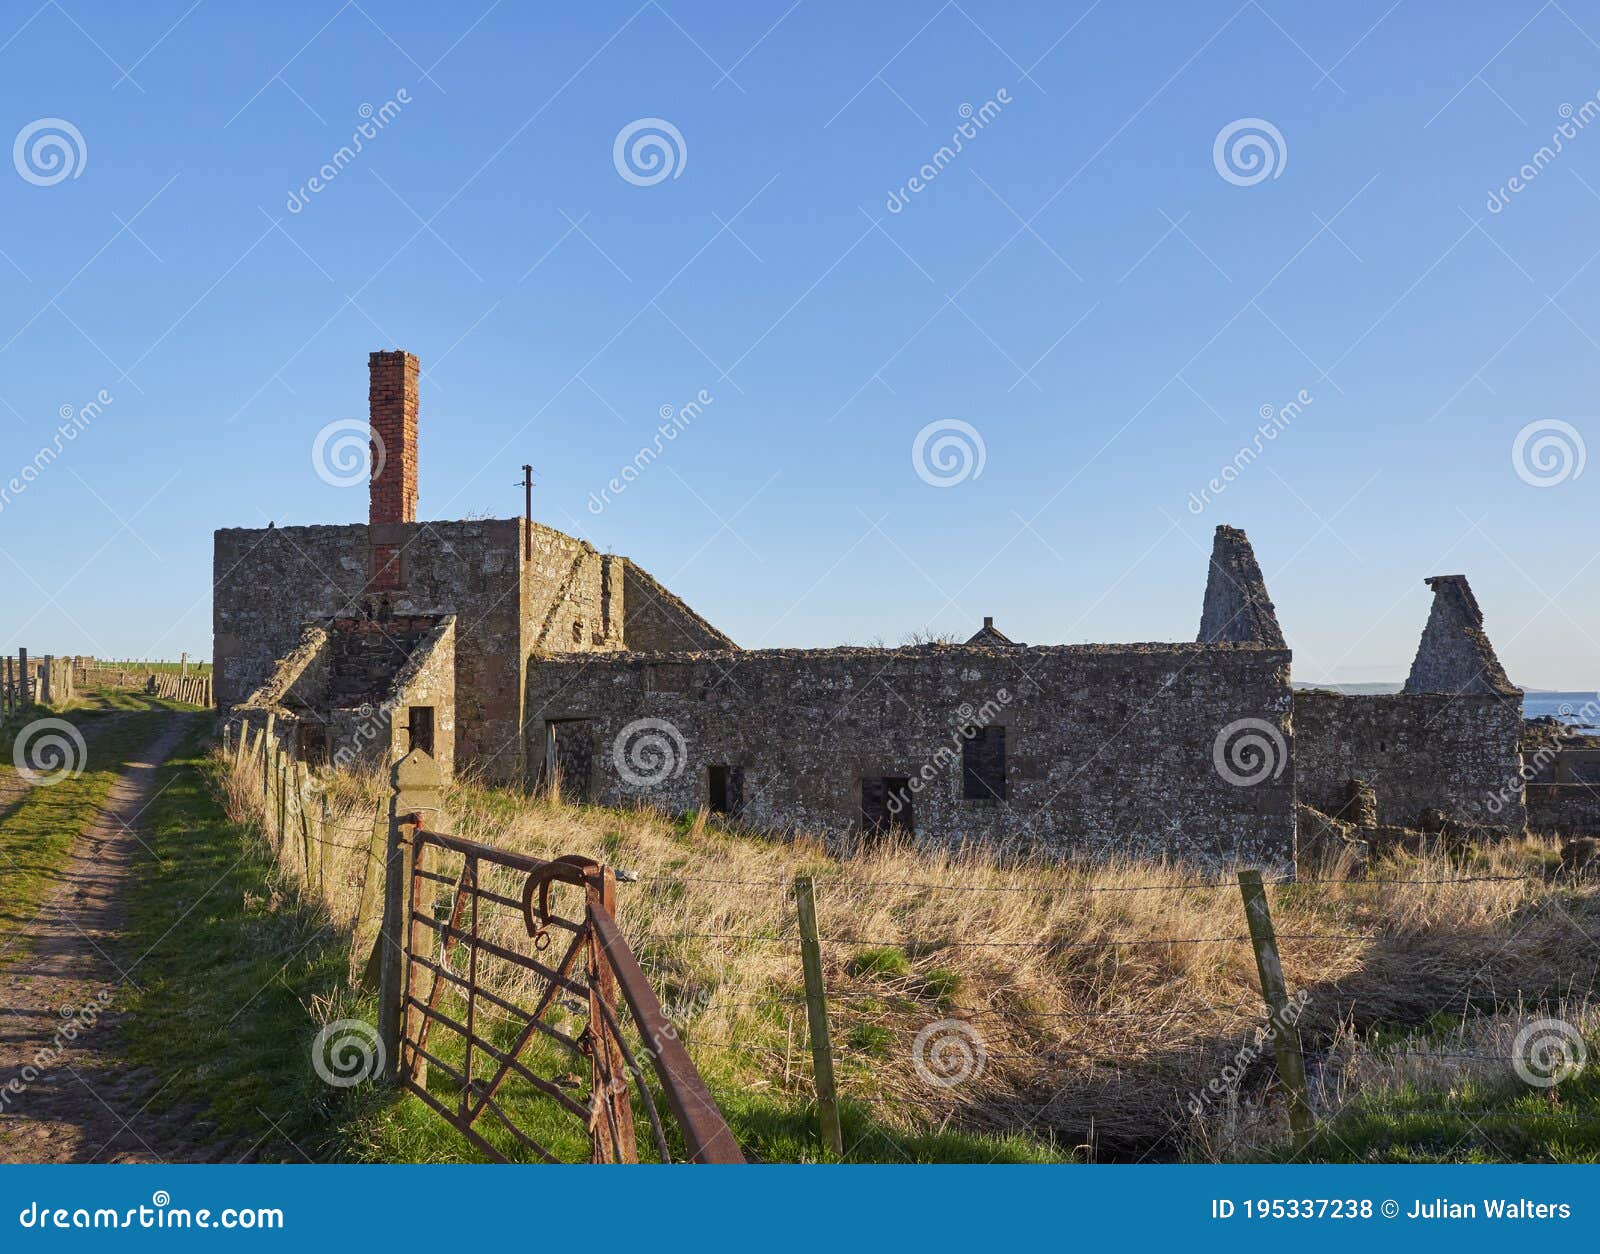 old farm buildings lie abandoned near the east coast of scotland at usan.